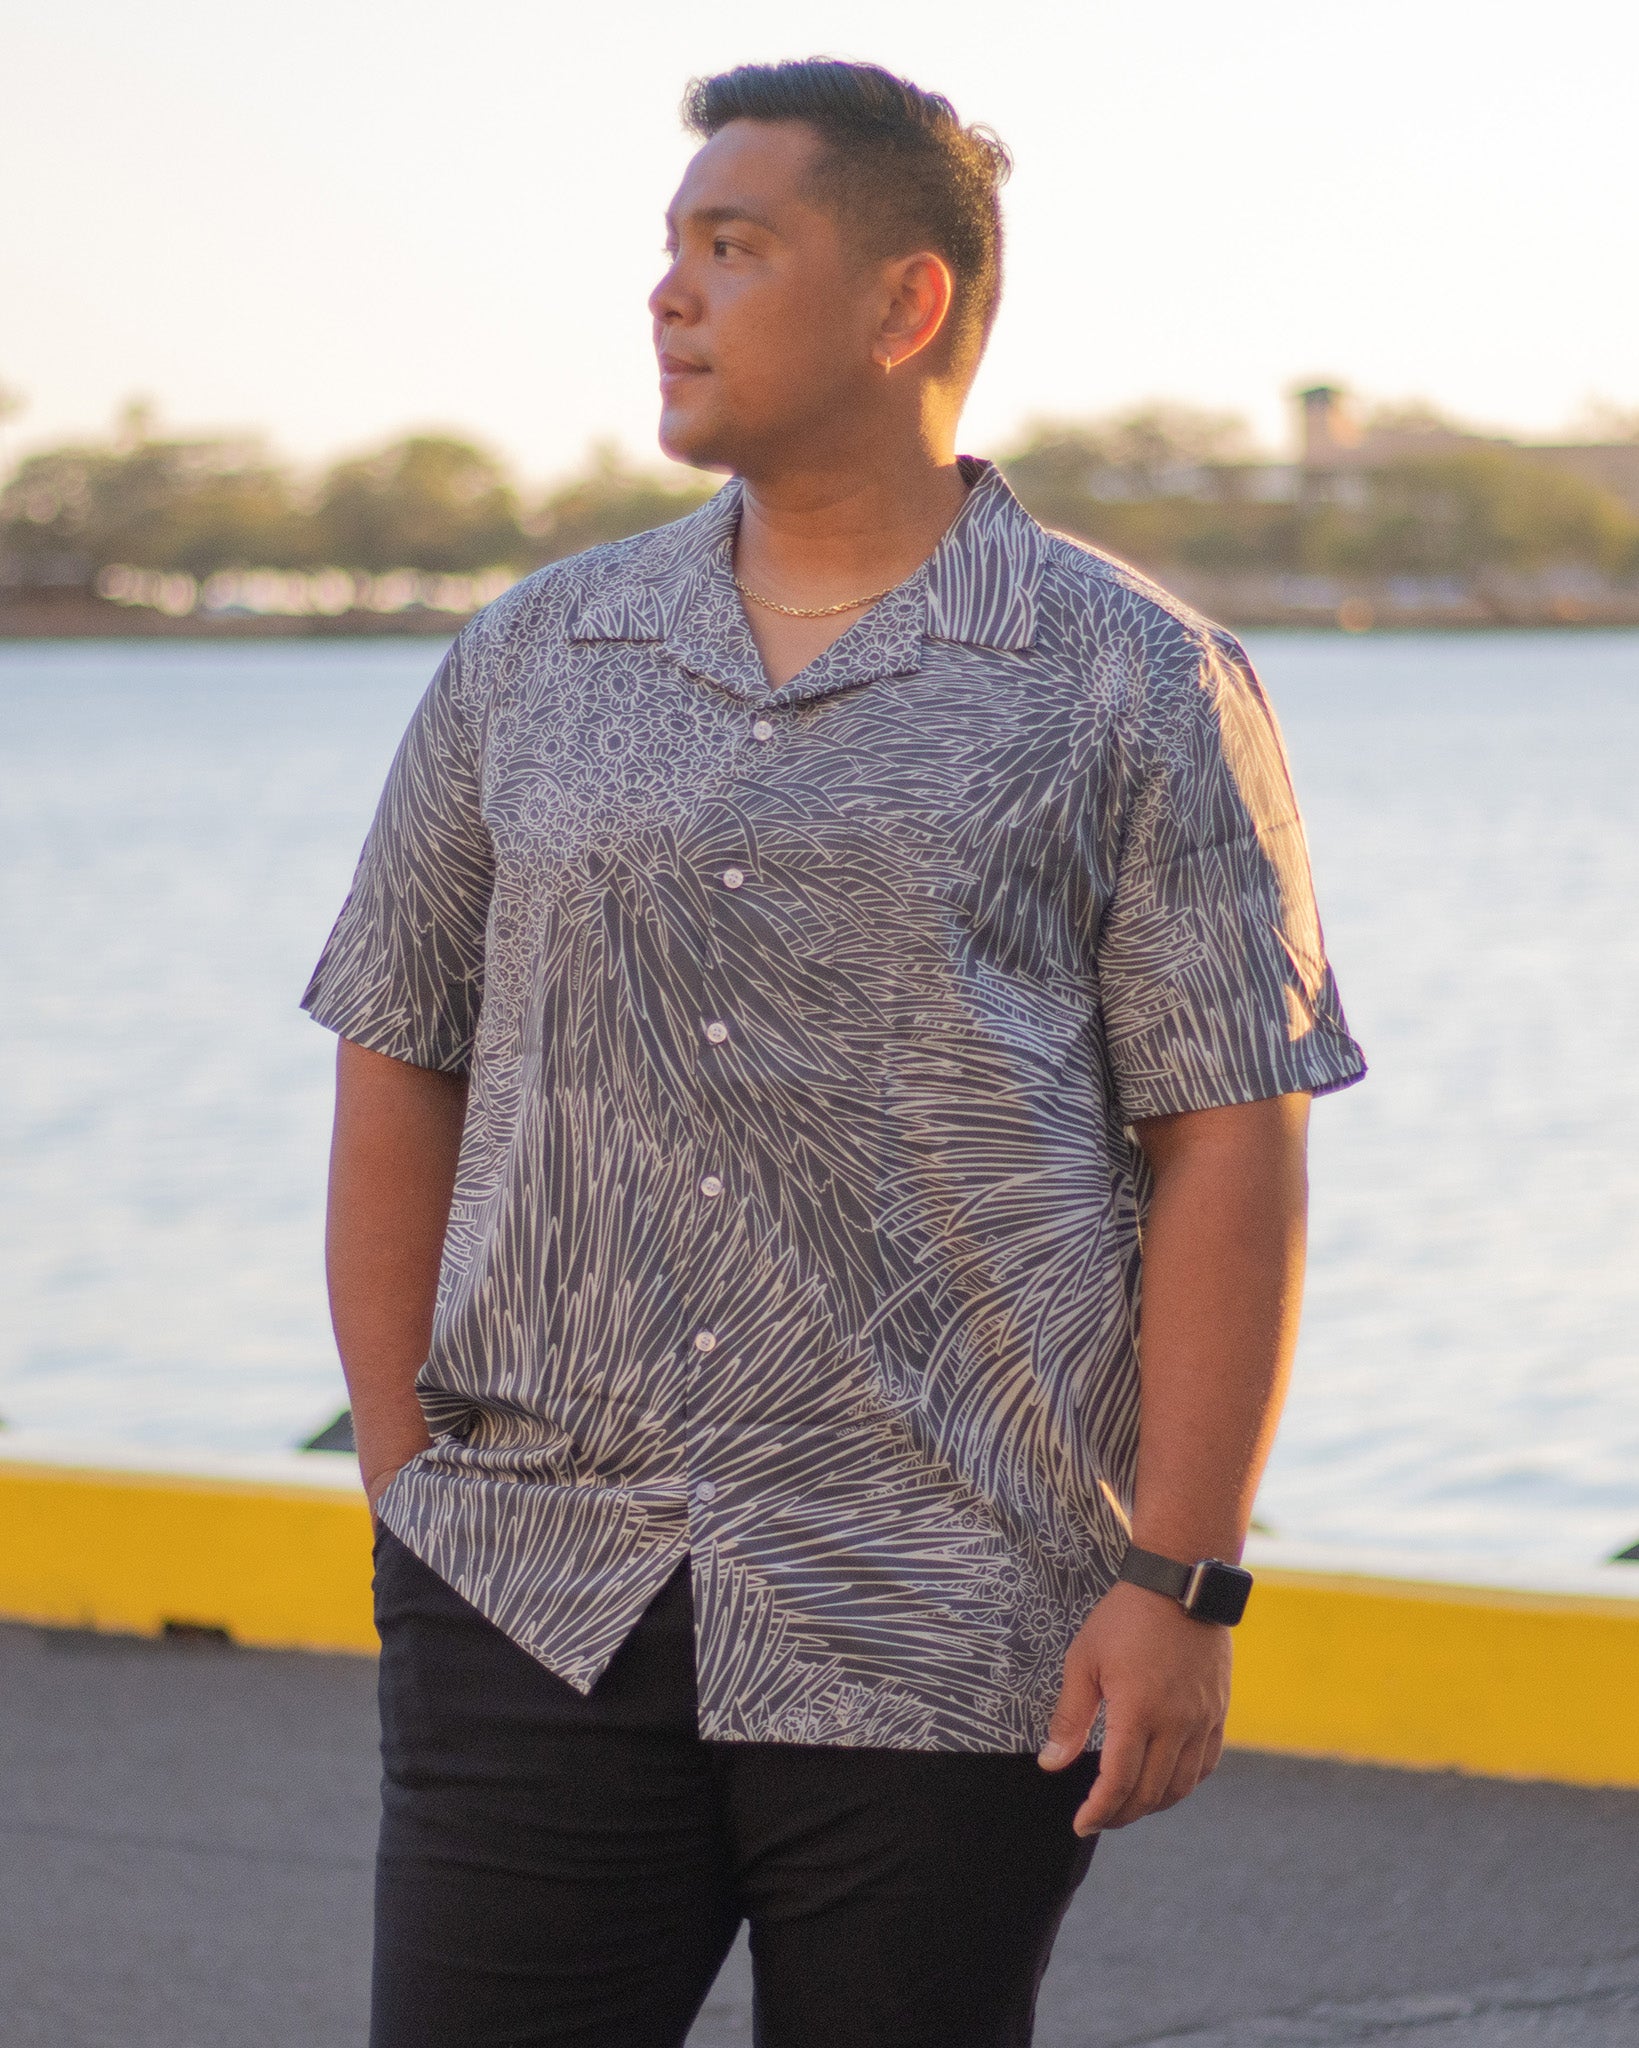 Pop-Up Mākeke - Kini Zamora - Silversword Aloha Shirt - Black & White